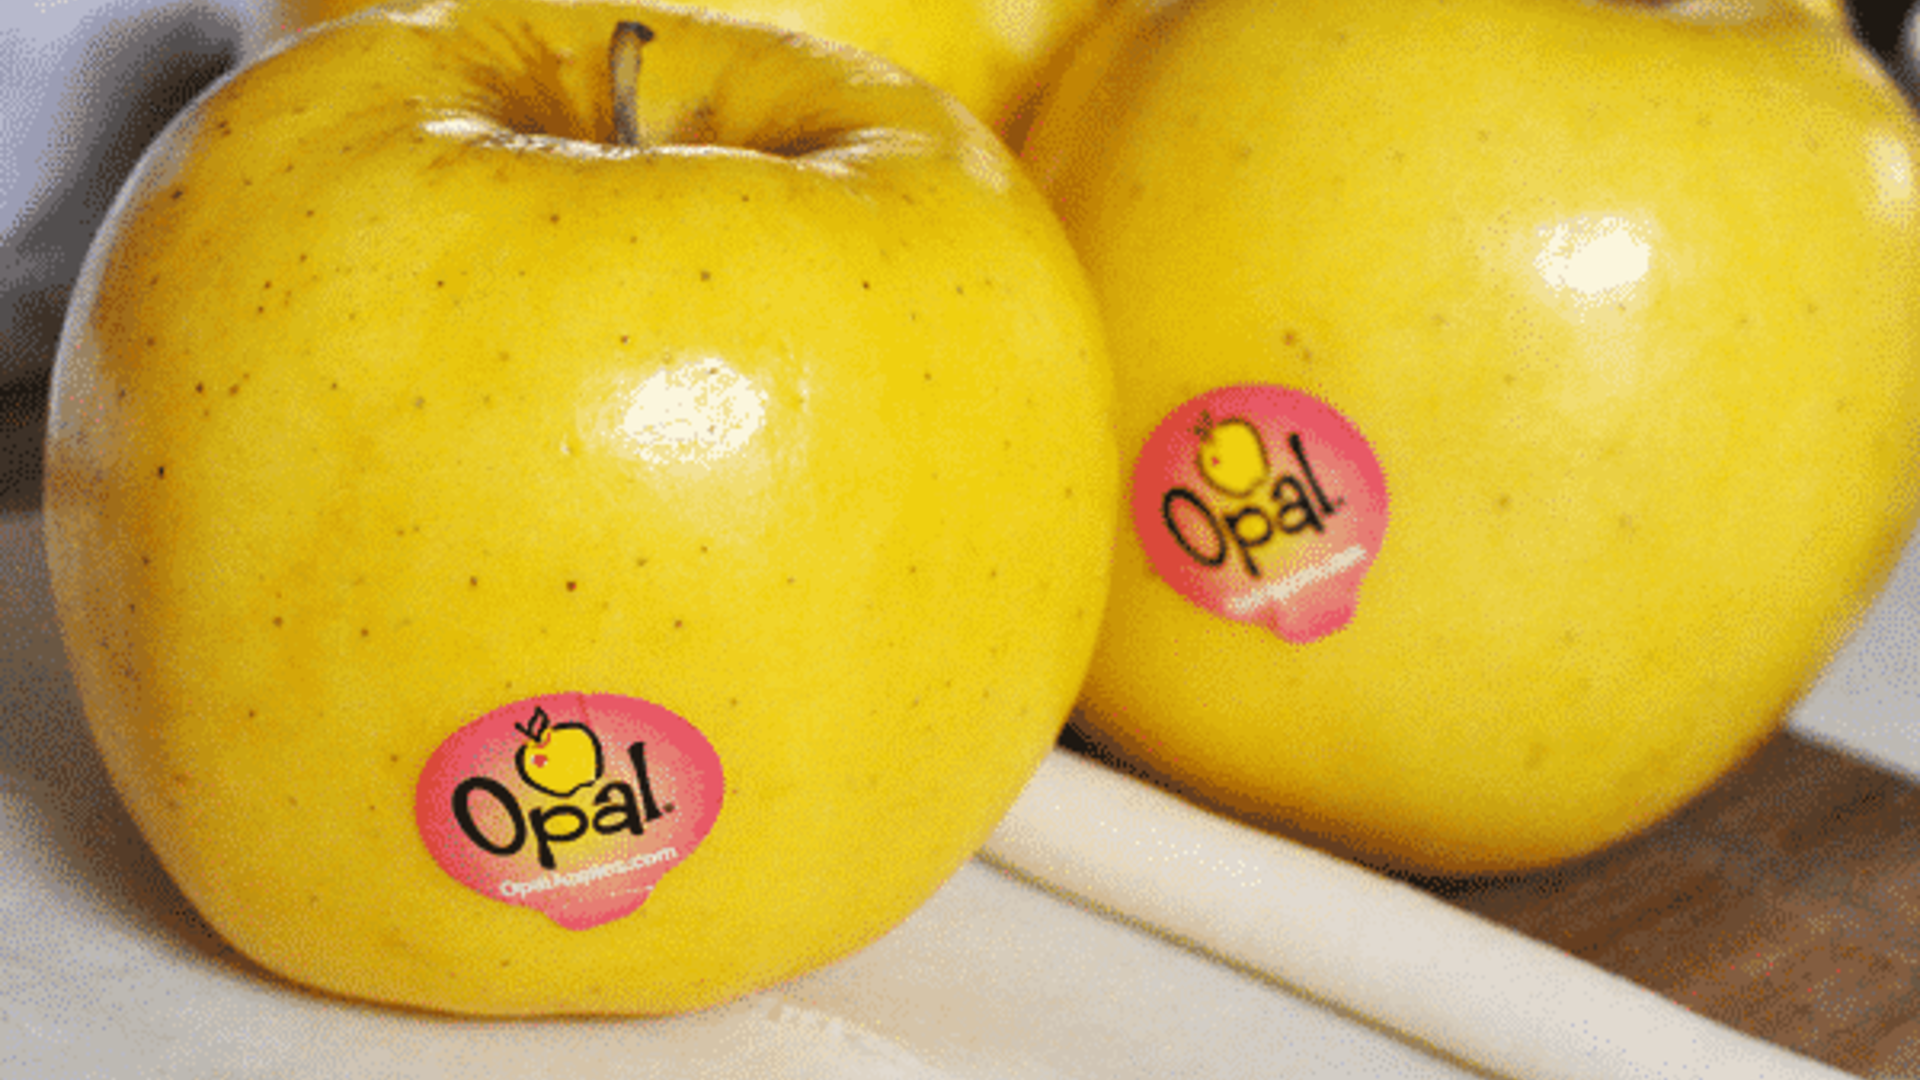 Opal Apple - The FruitGuys